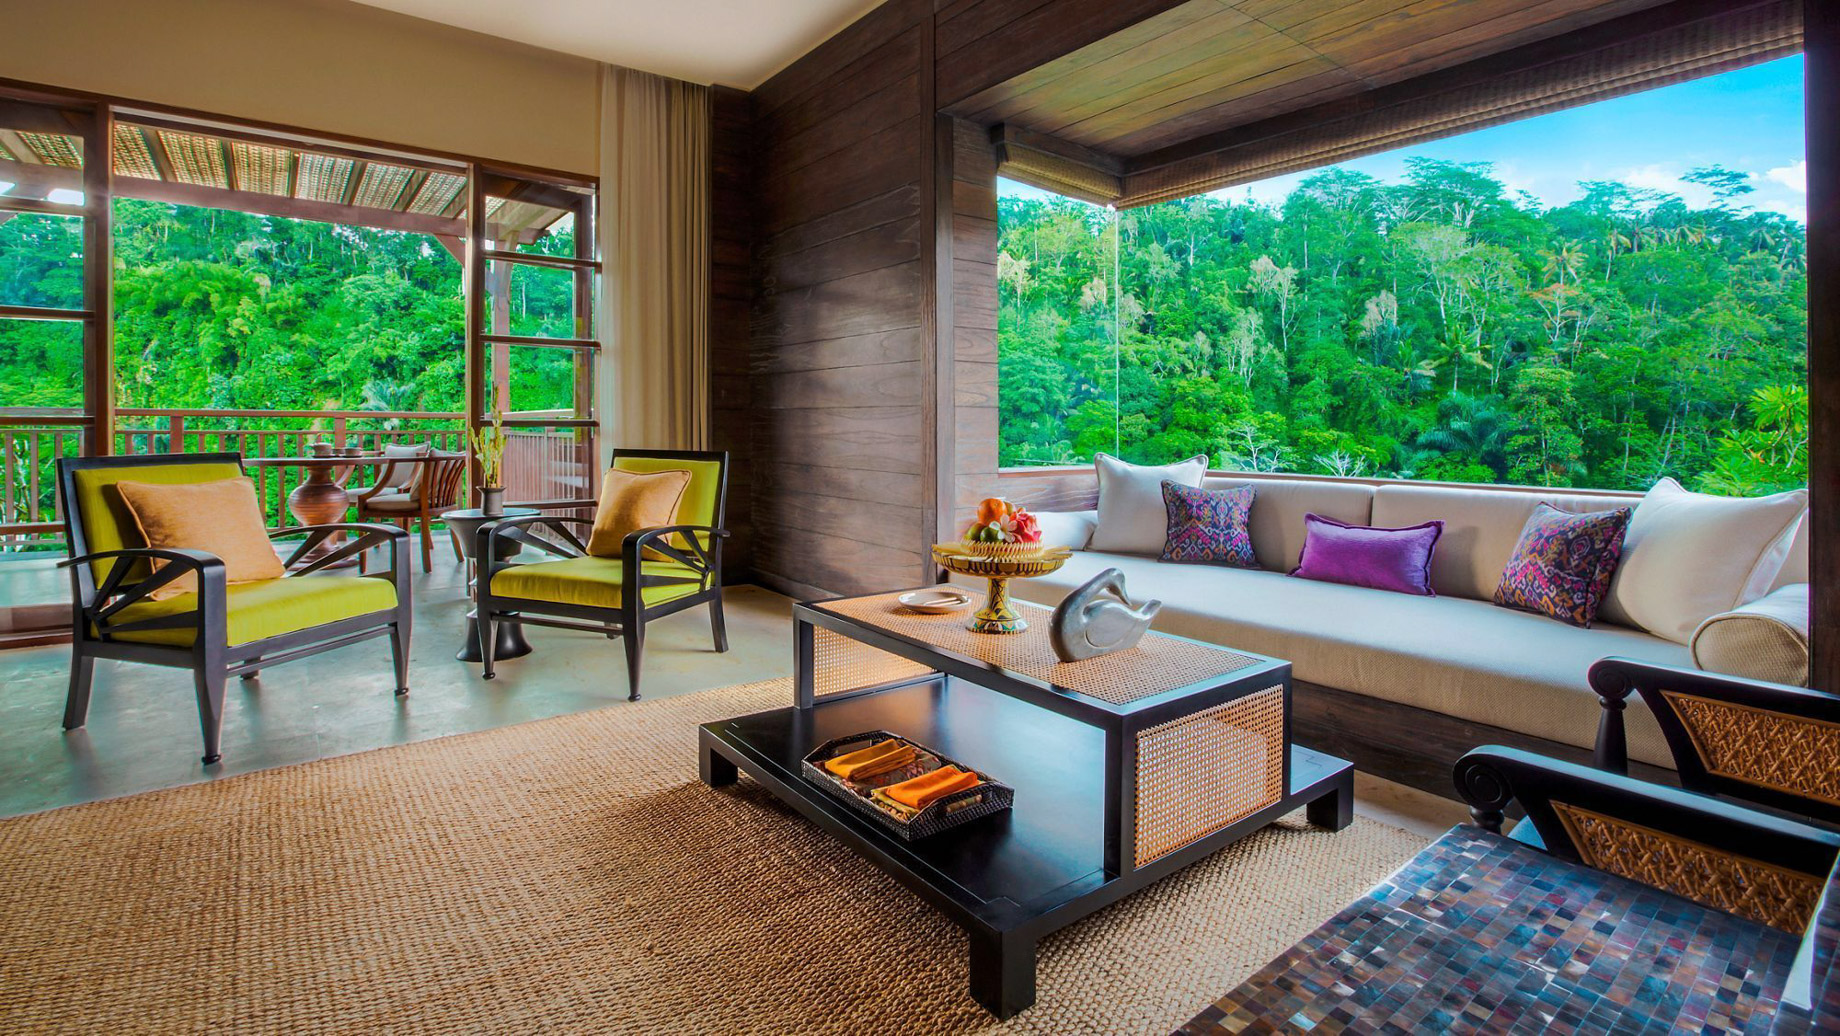 The Ritz-Carlton, Mandapa Reserve Resort - Ubud, Bali, Indonesia - Suite Living Room